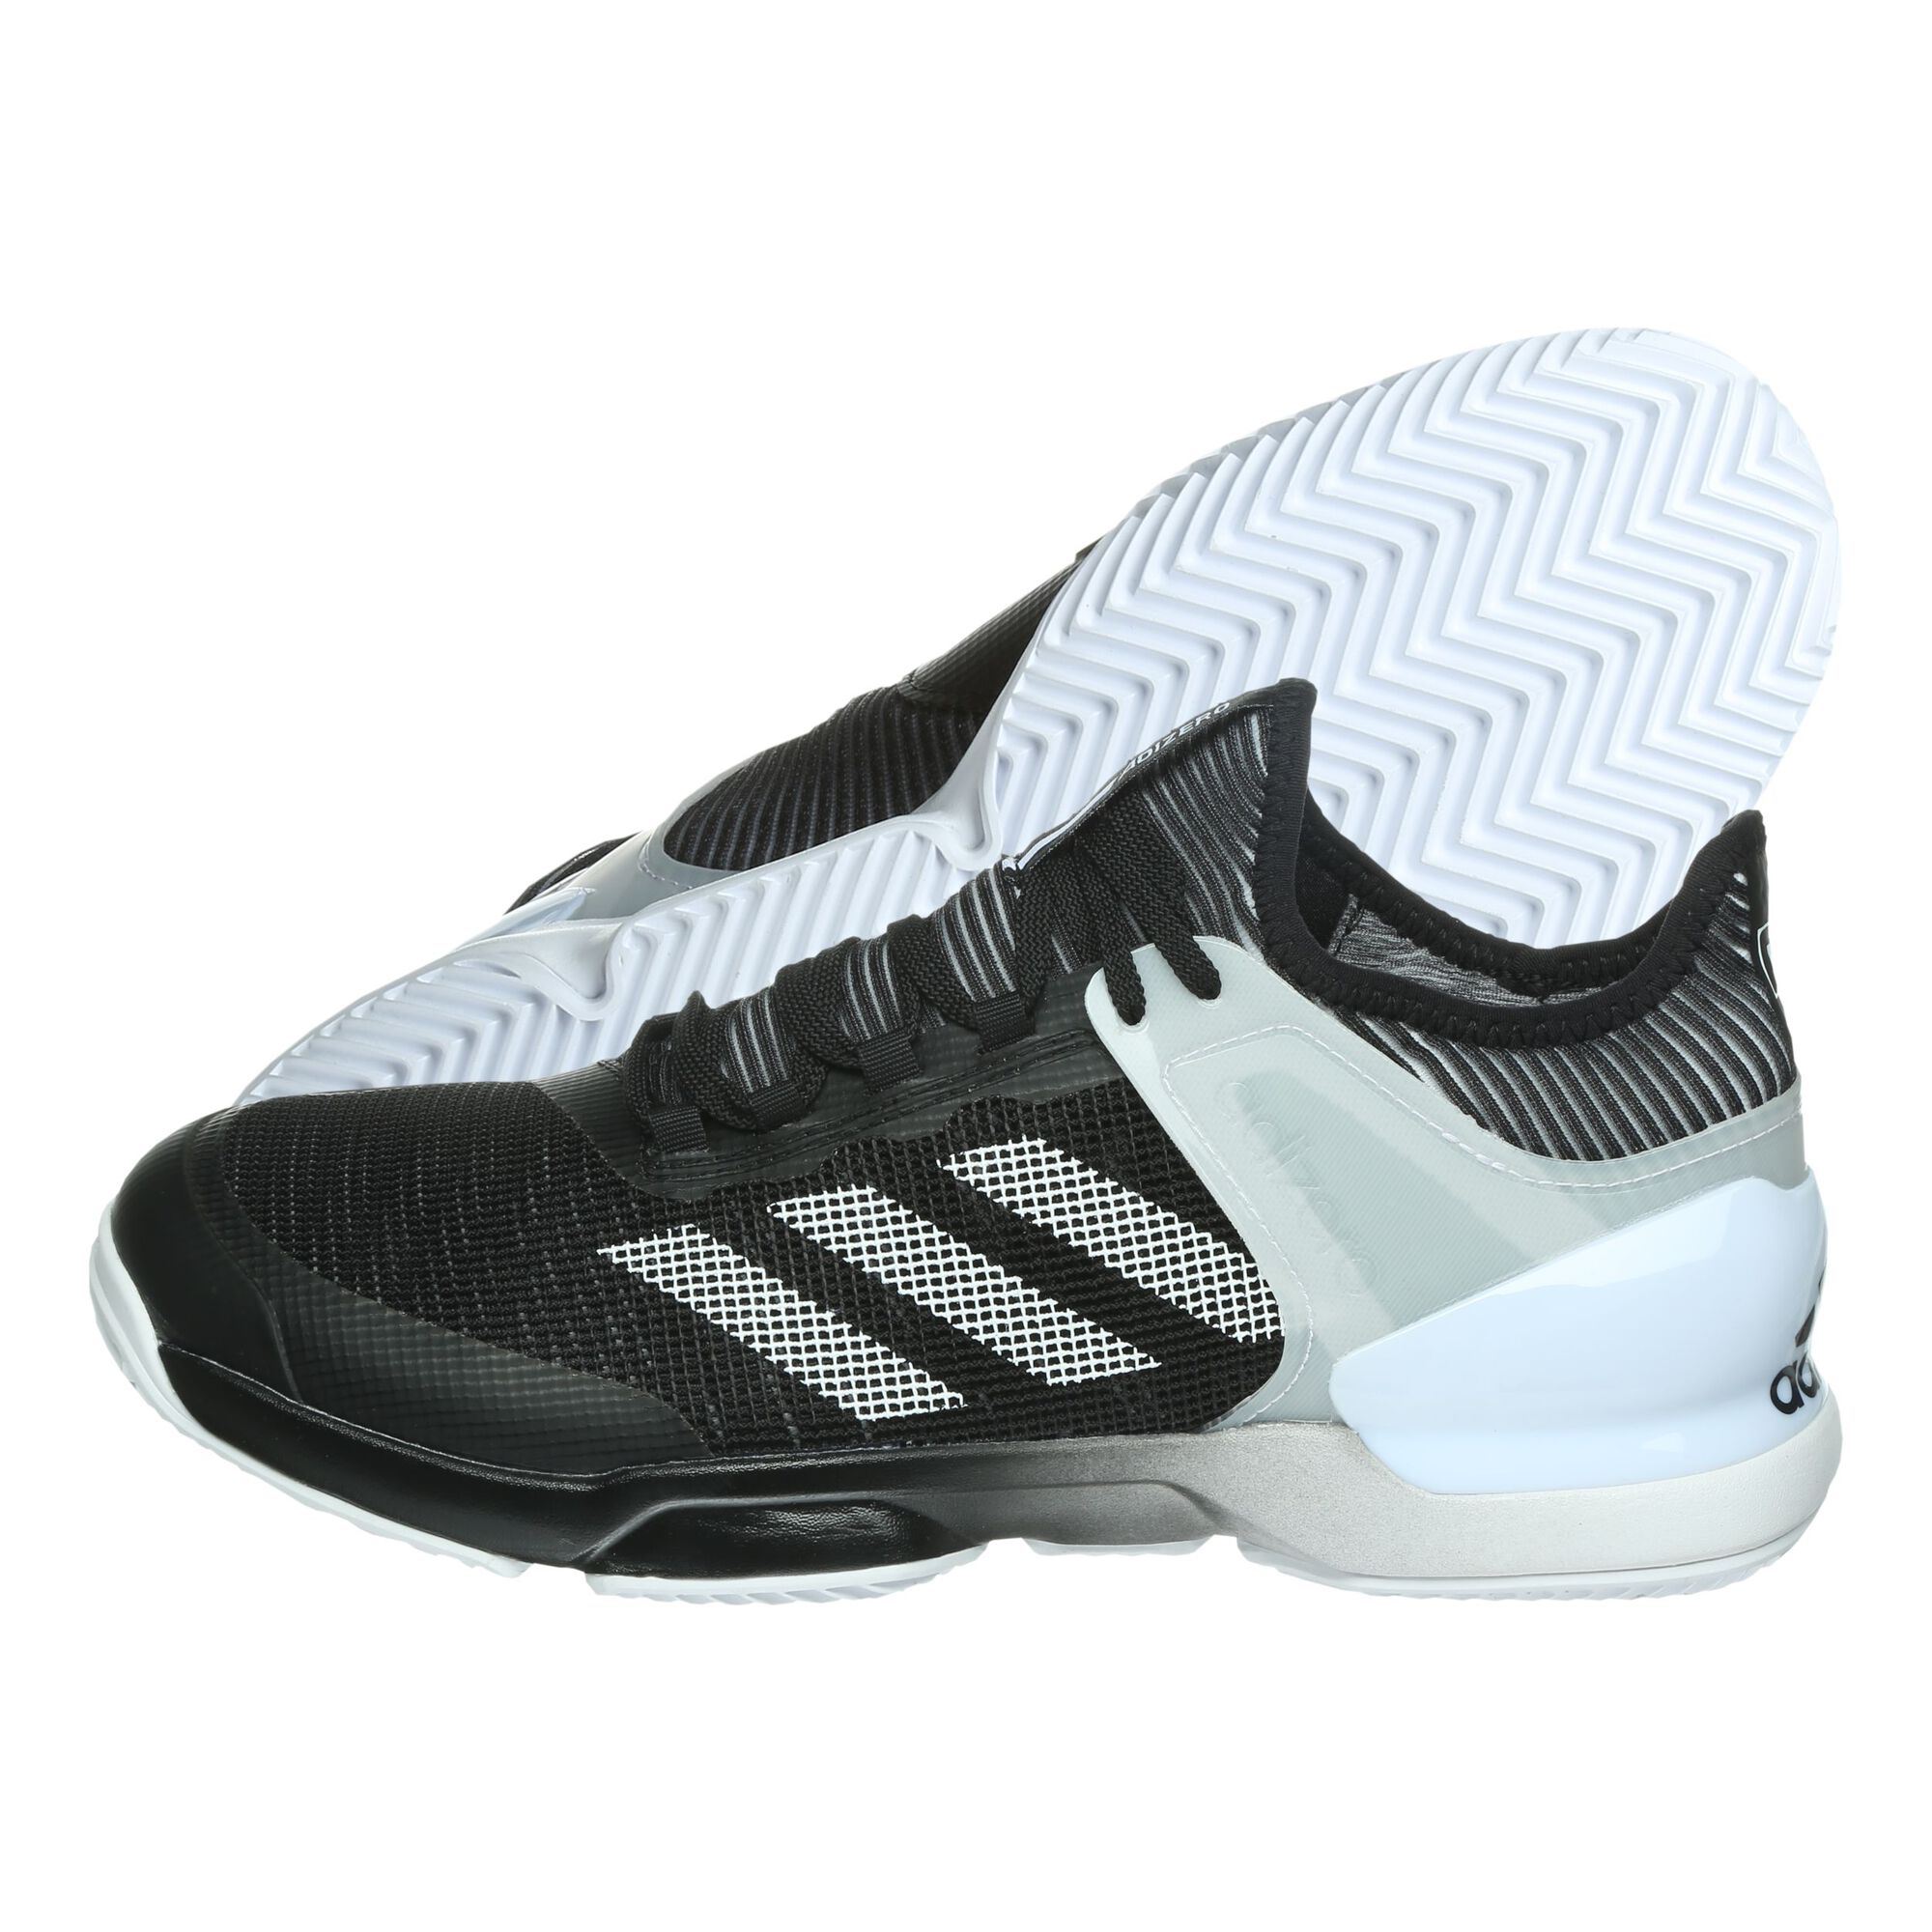 trog Fractie sap buy adidas Adizero Ubersonic 2 Clay Court Shoe Men - Black, Grey online |  Tennis-Point